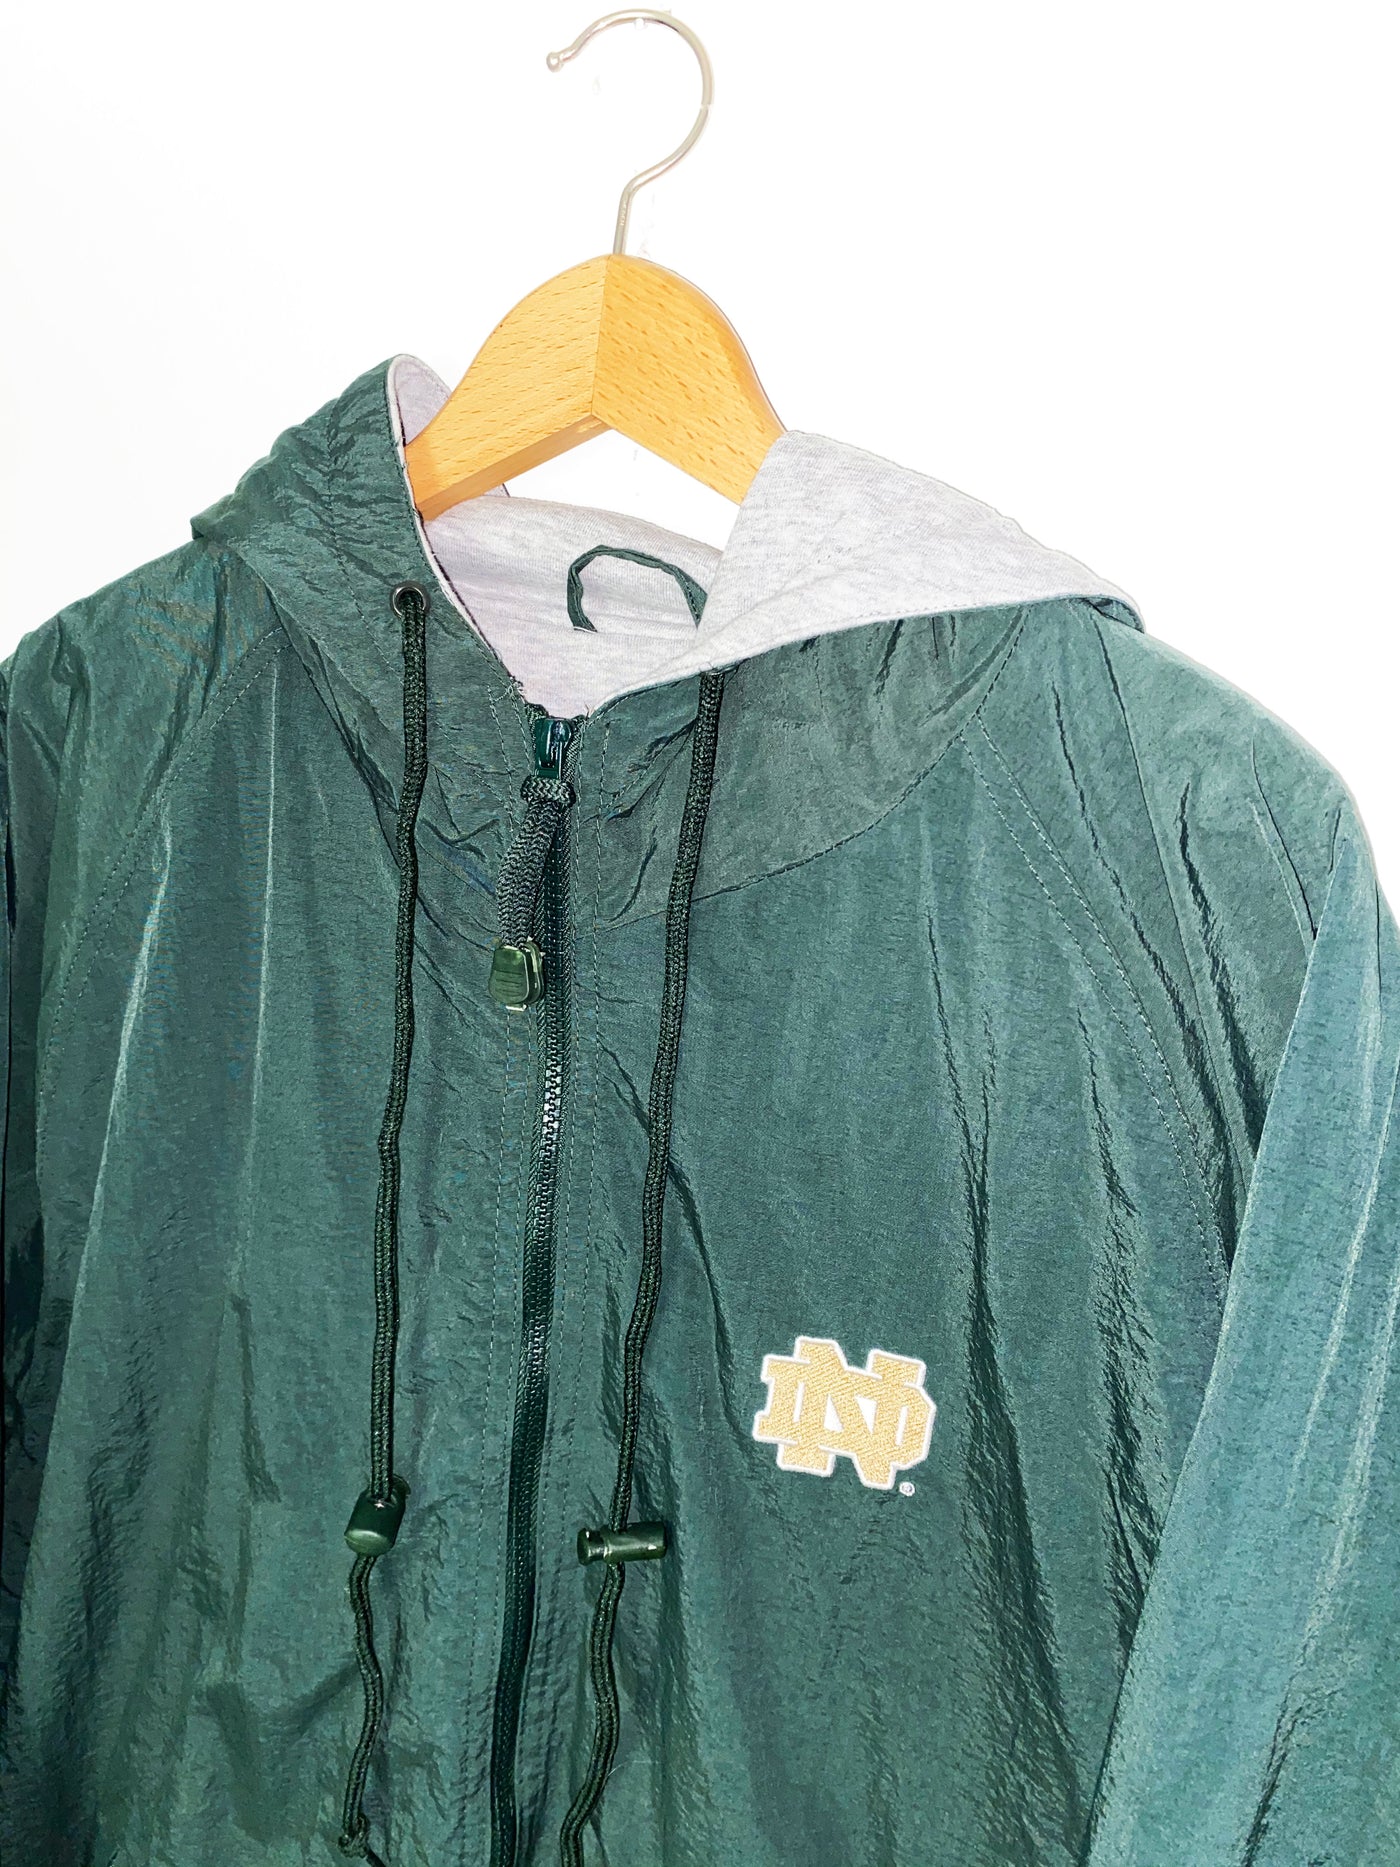 Vintage Notre Dame Weatherproof Garment Company Lined Jacket